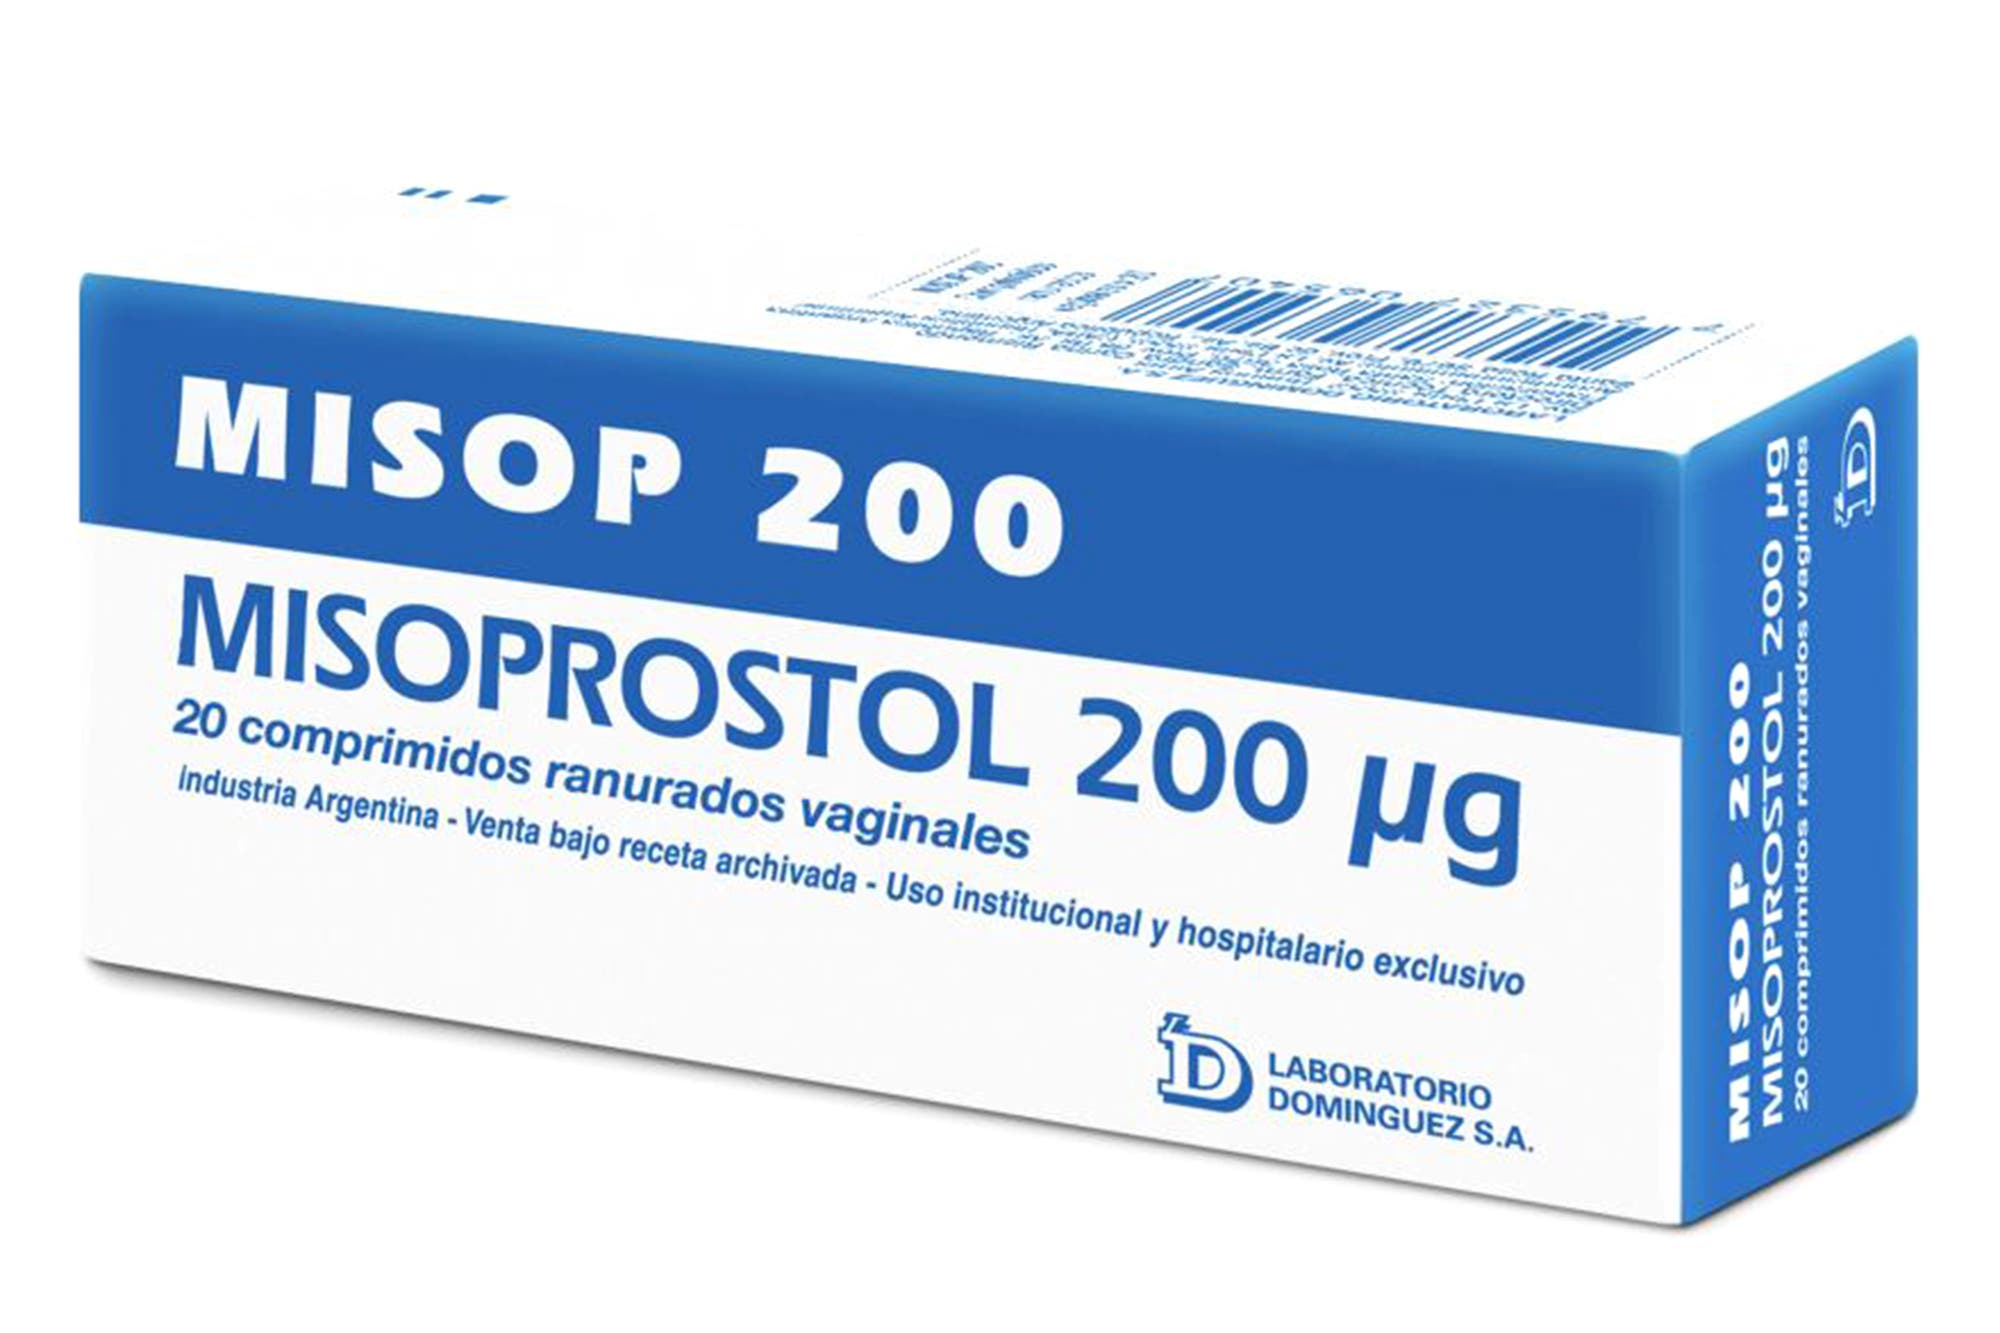 Misoprostol venta sin receta online — por internet sin receta